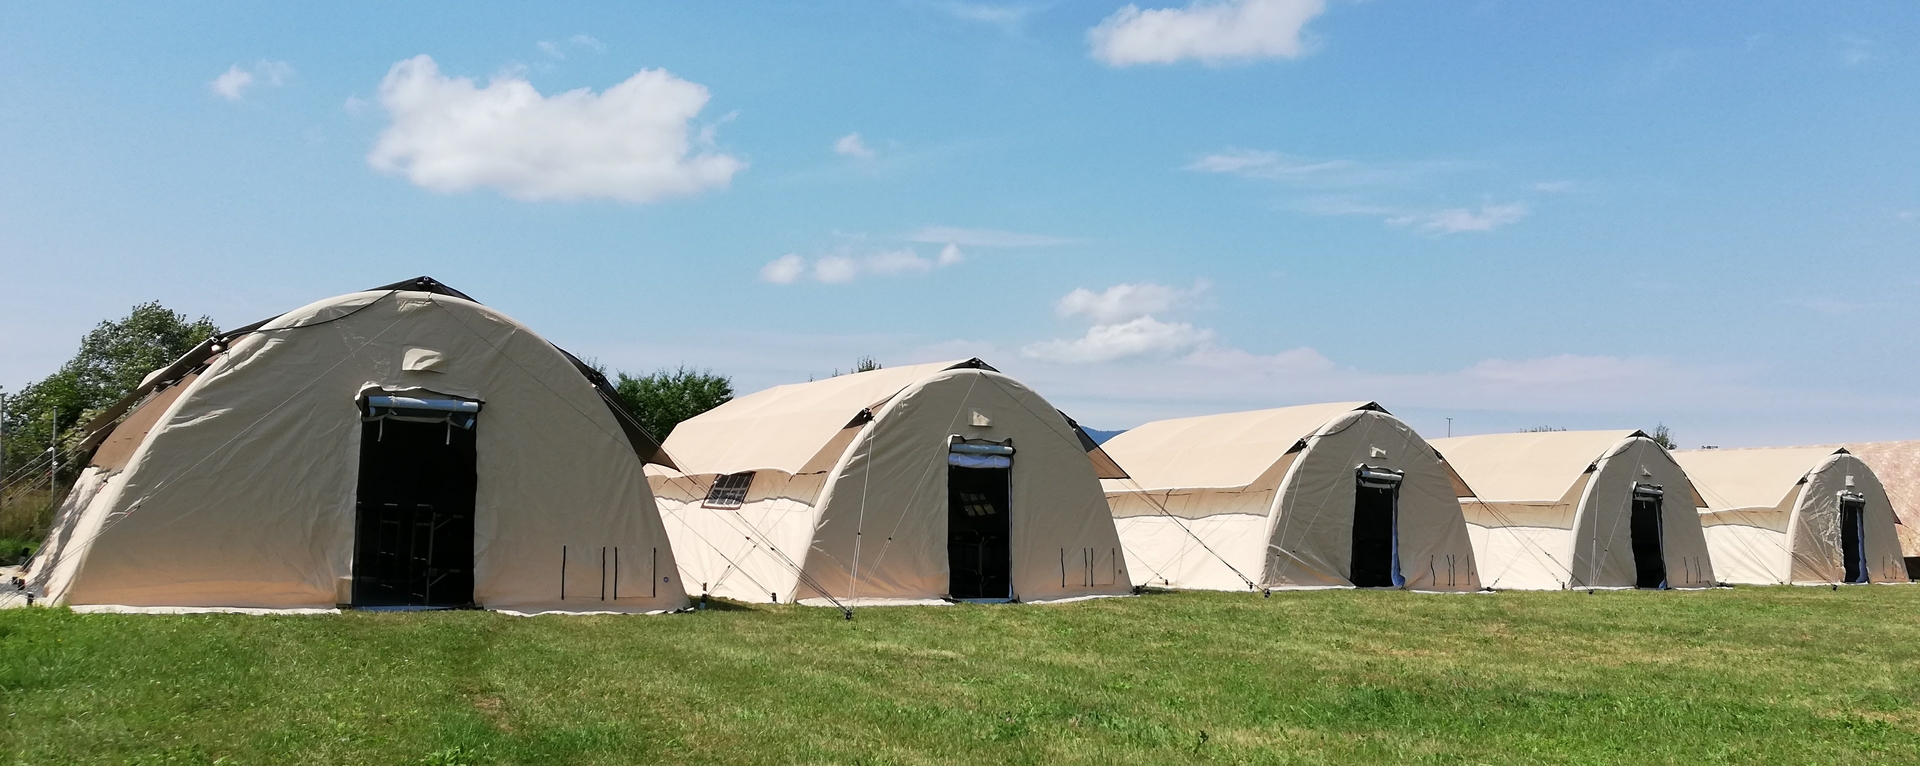 NIXUS PRO Emergency Medical Tents - Triage Tents, Isolation Tents, Hospital Tents